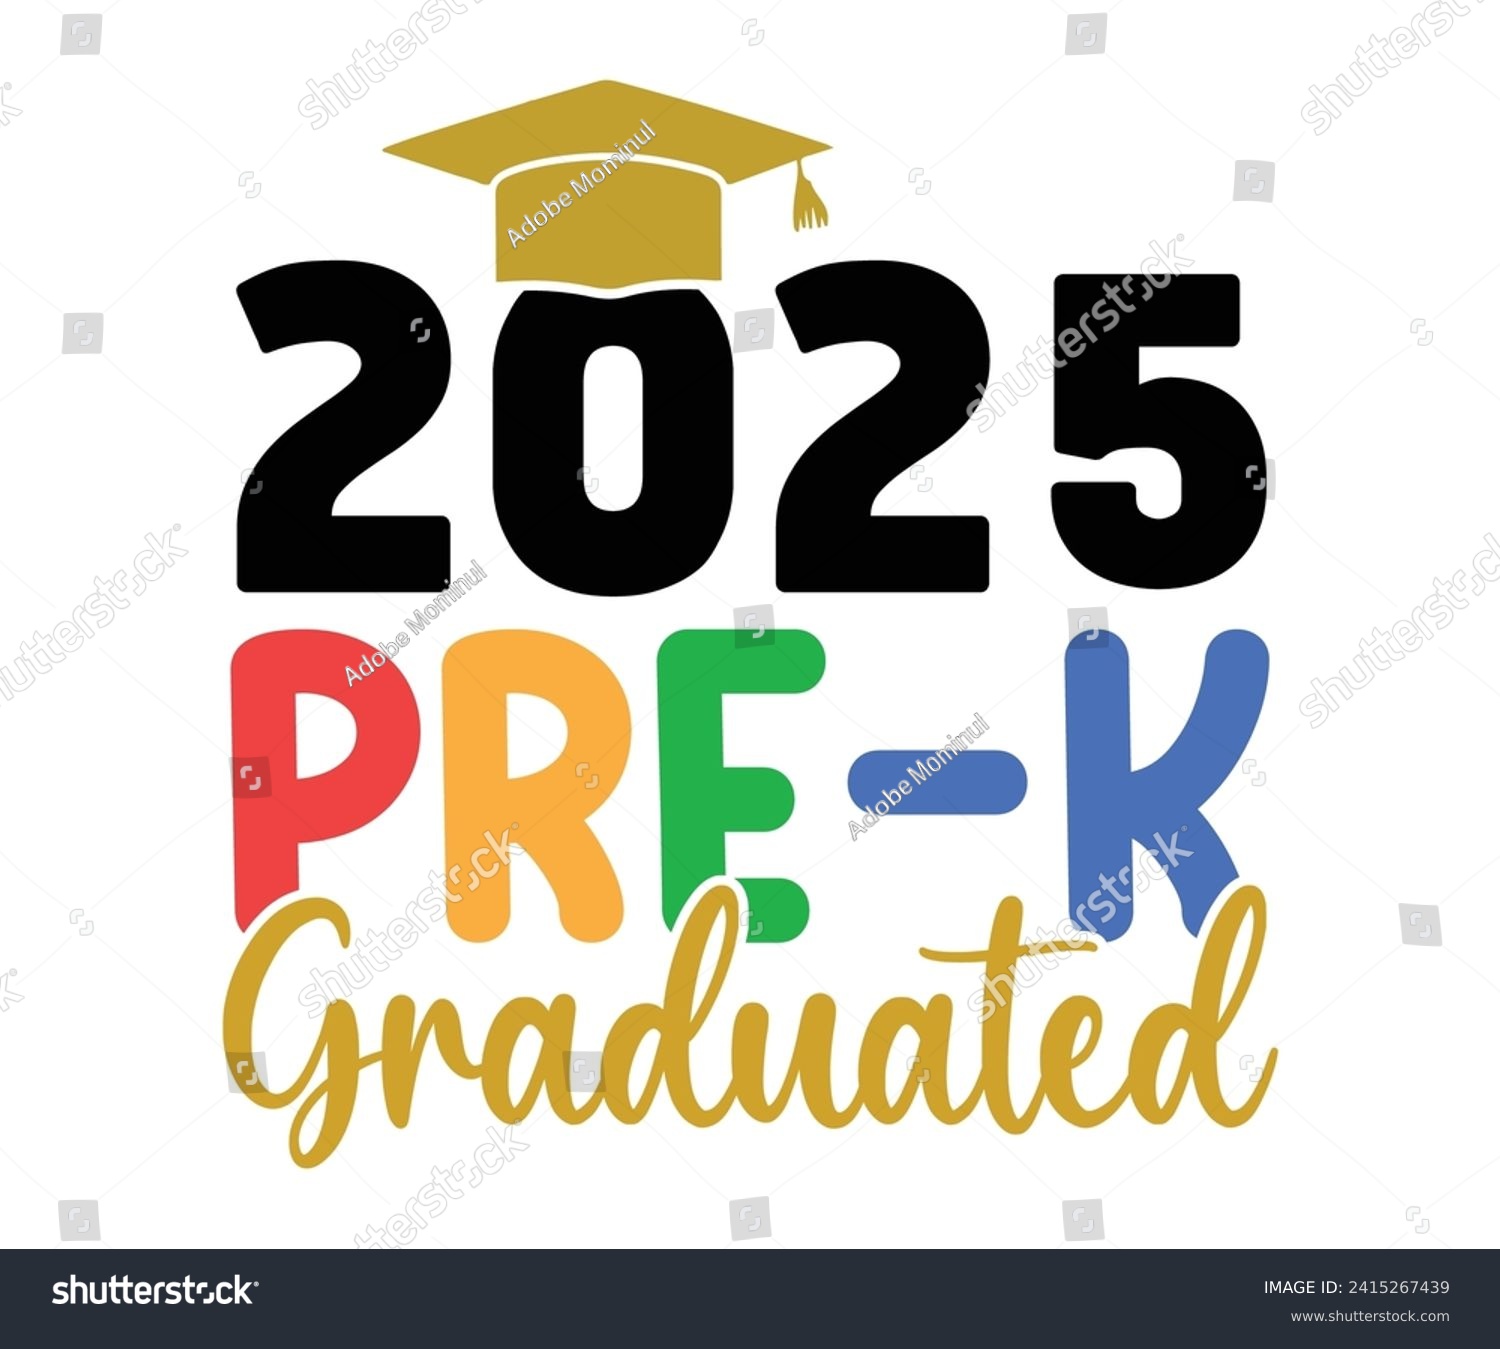 SVG of Pre-k Grad 2024,2025,Svg,Graduation Svg,Senior Svg,Graduate T shirt,Graduation cap,Graduation 2024 Shirt,Family Graduation Svg,Pre-K Grad Shirt,Graduation Qoutes,Graduation Gift Shirt,Cut File,Groovy, svg